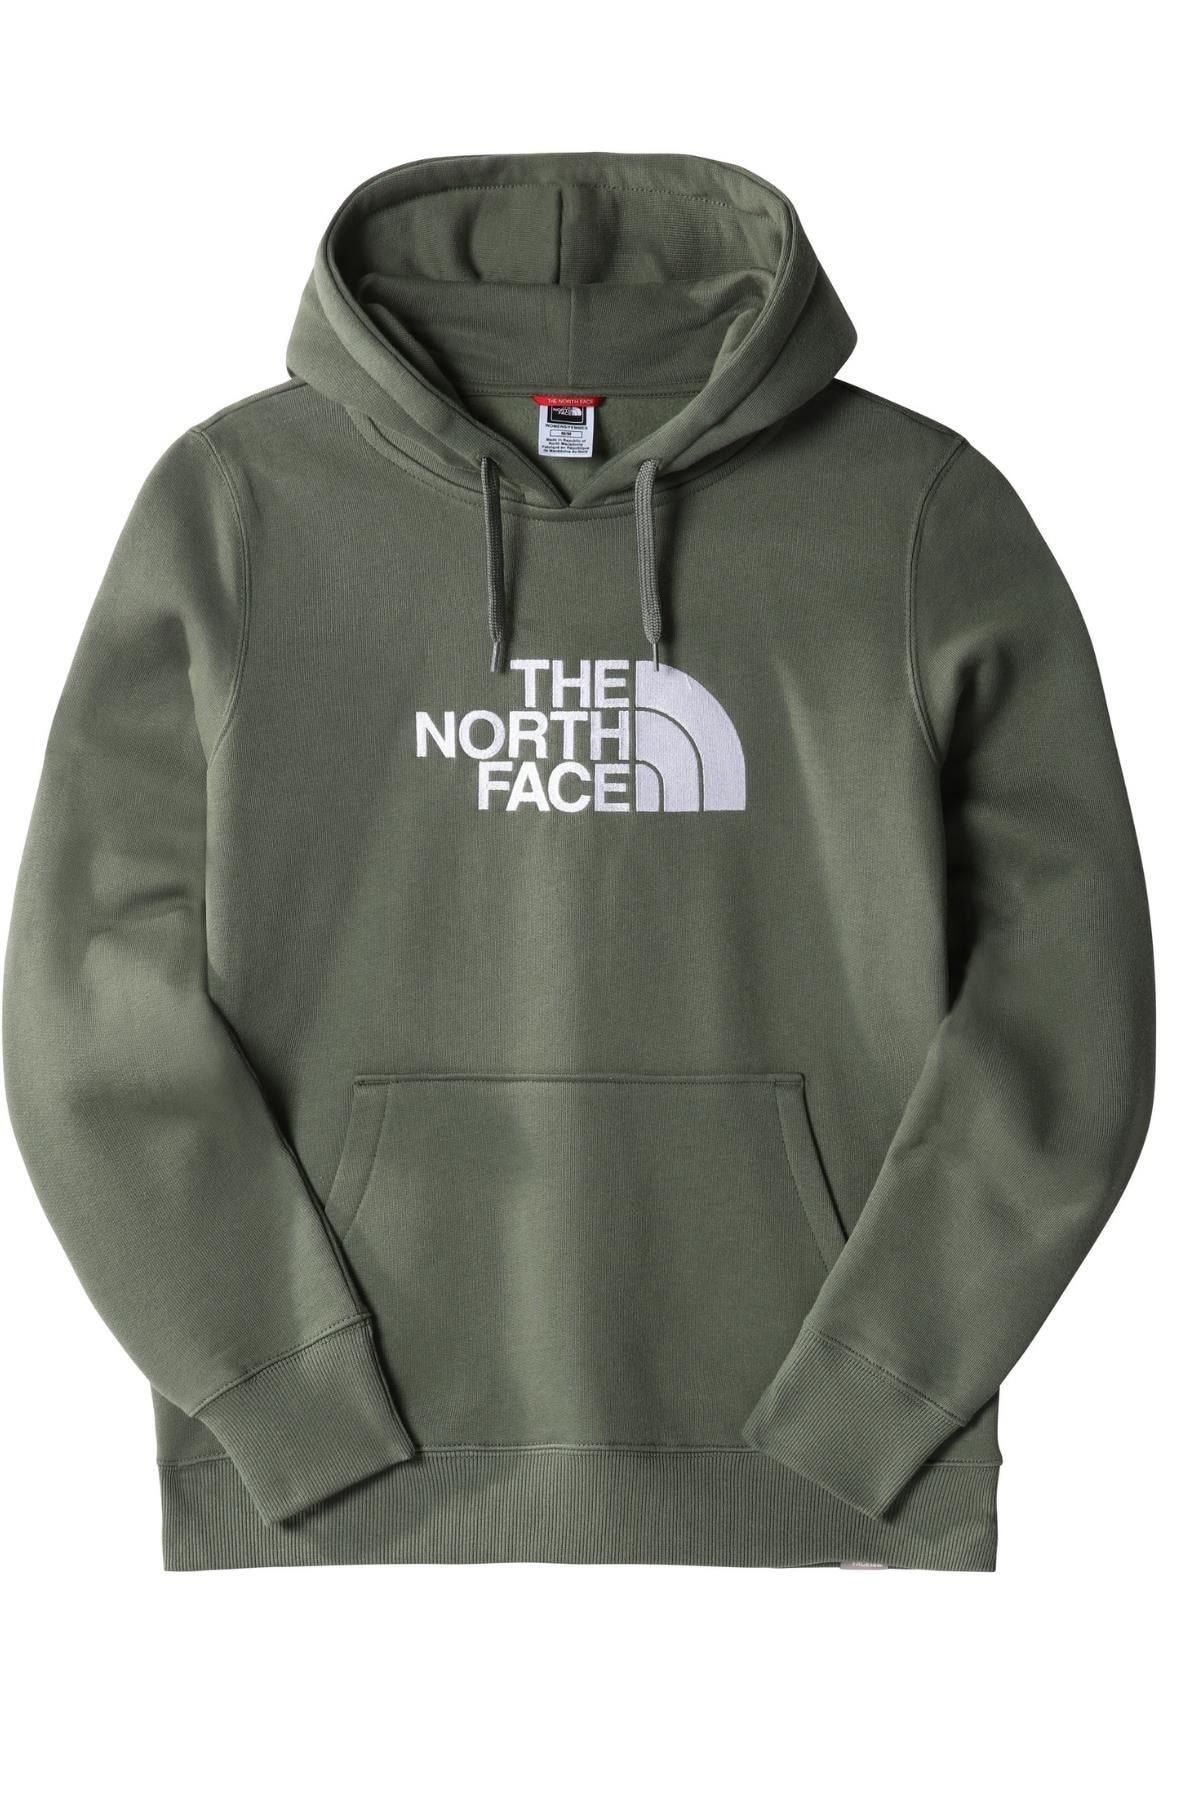 The North Face Drew Peak Pullover Hoodie Kapüşonlu Kadın Sweatshirt Yeşil